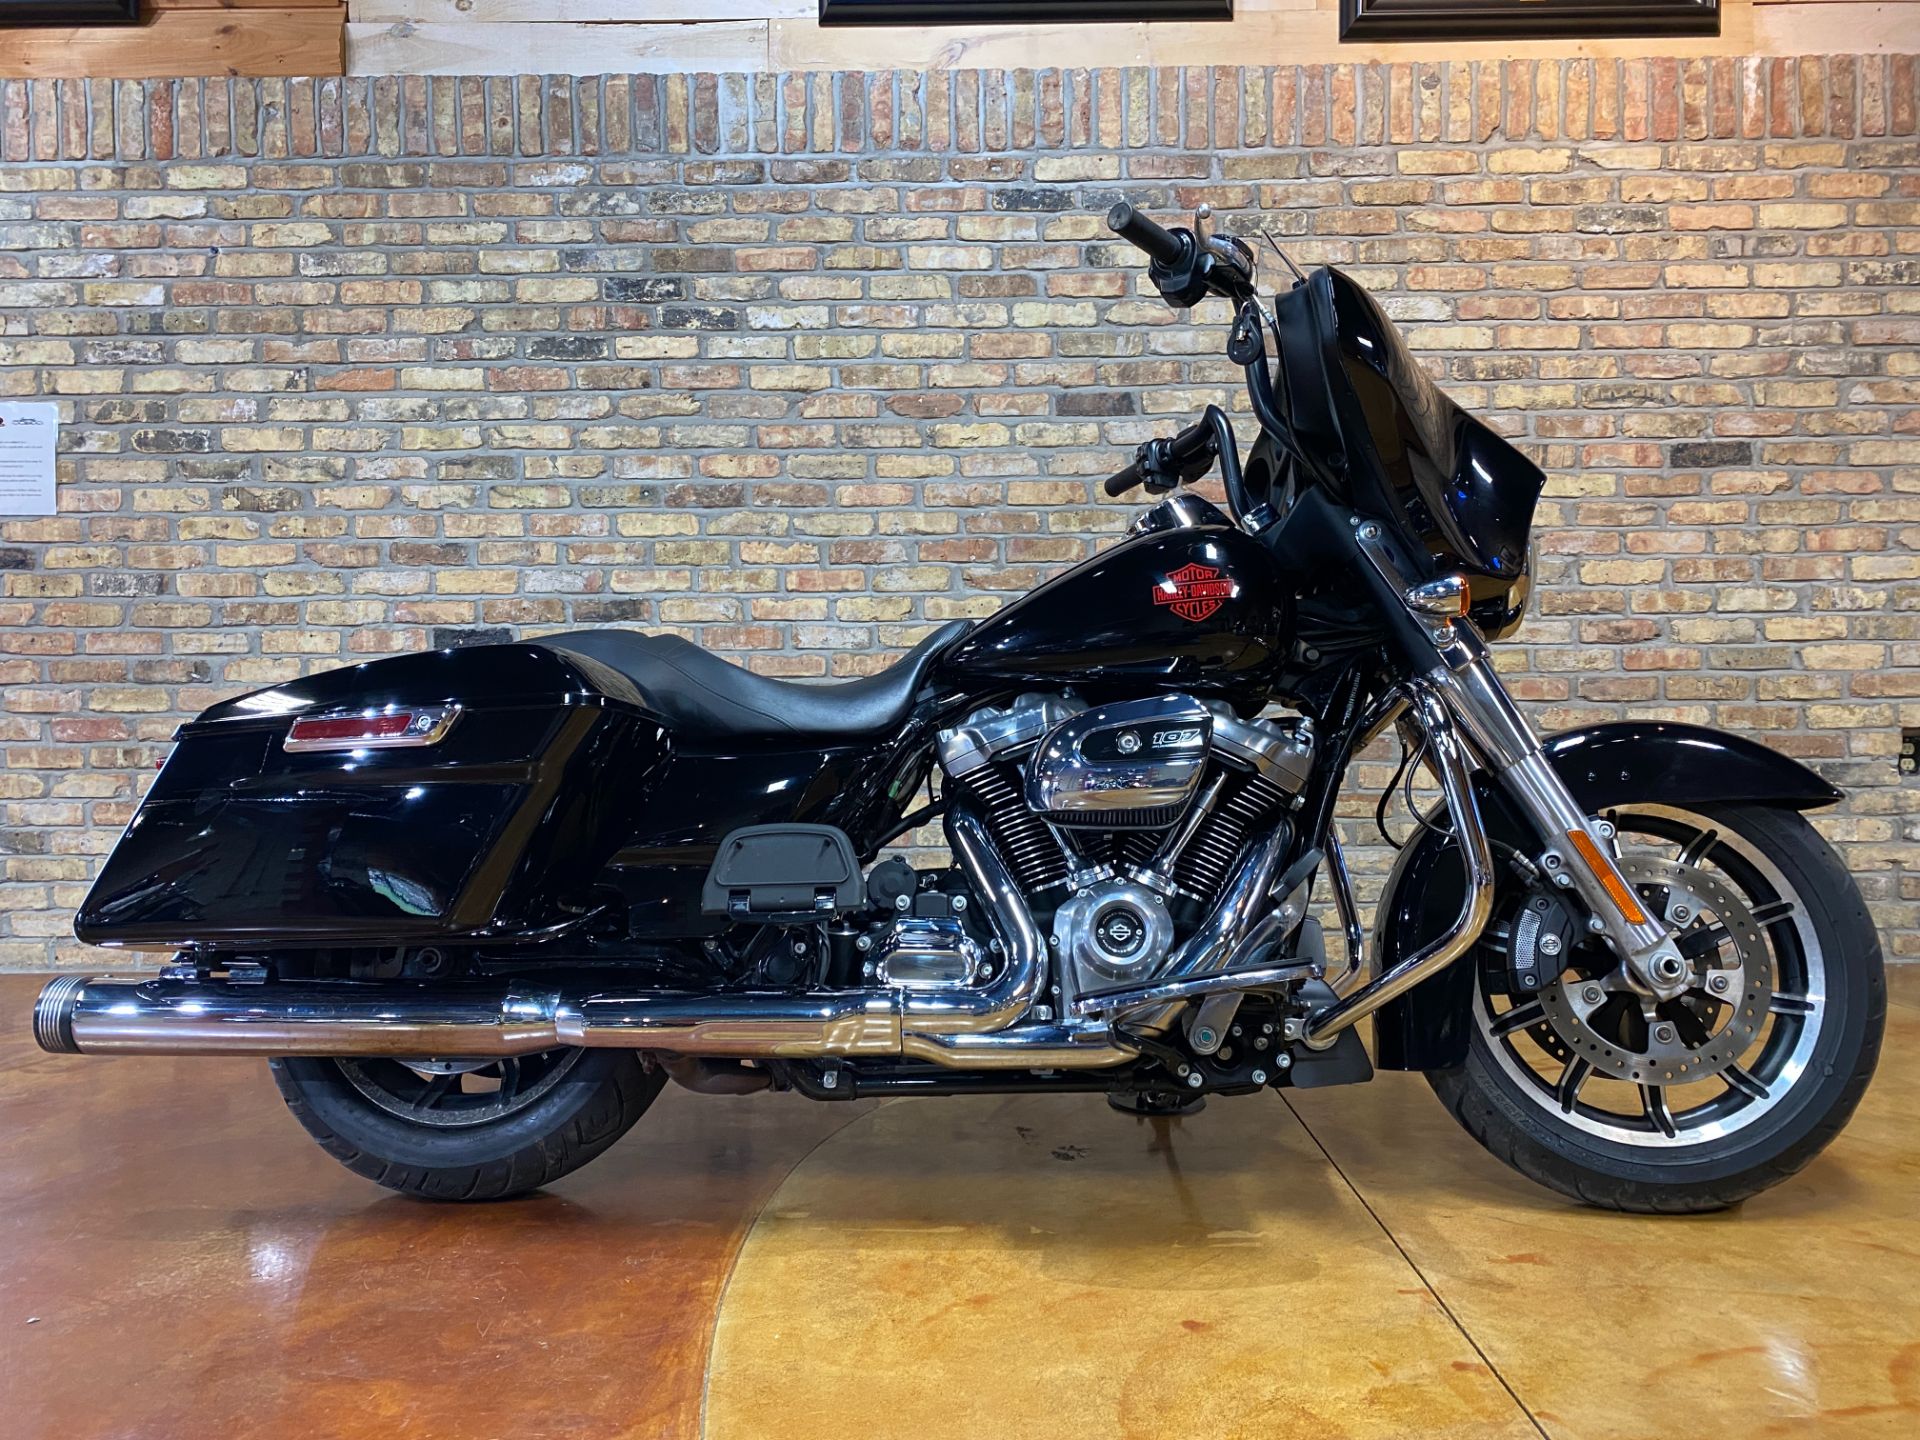 2020 Harley-Davidson Electra Glide® Standard in Big Bend, Wisconsin - Photo 19